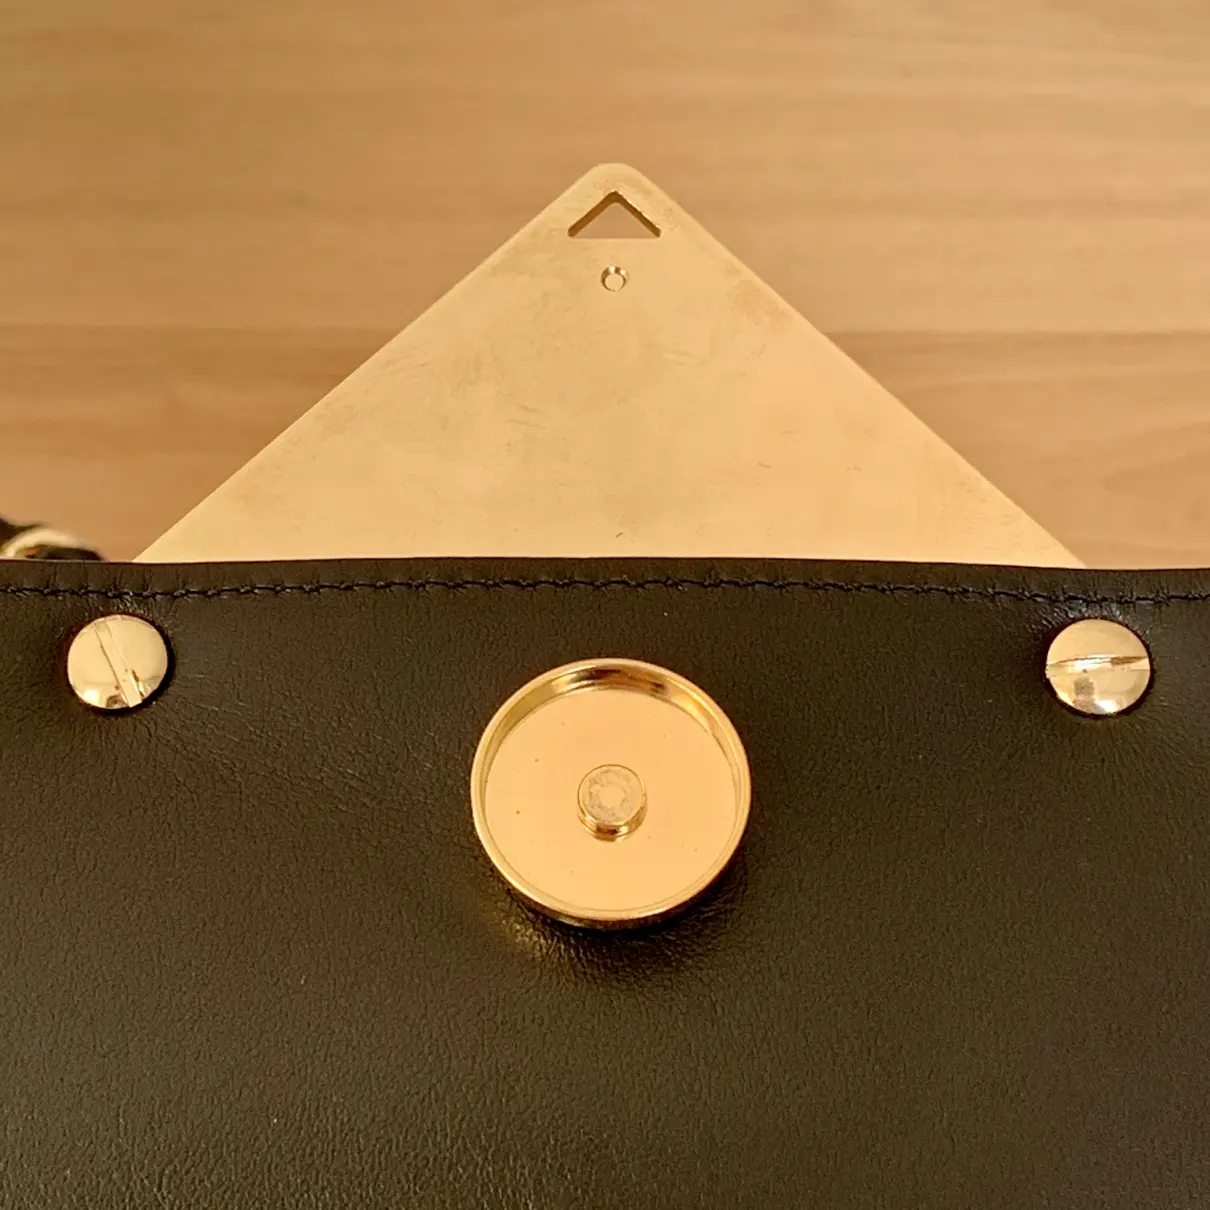 Buy Sara Battaglia Leather handbag online